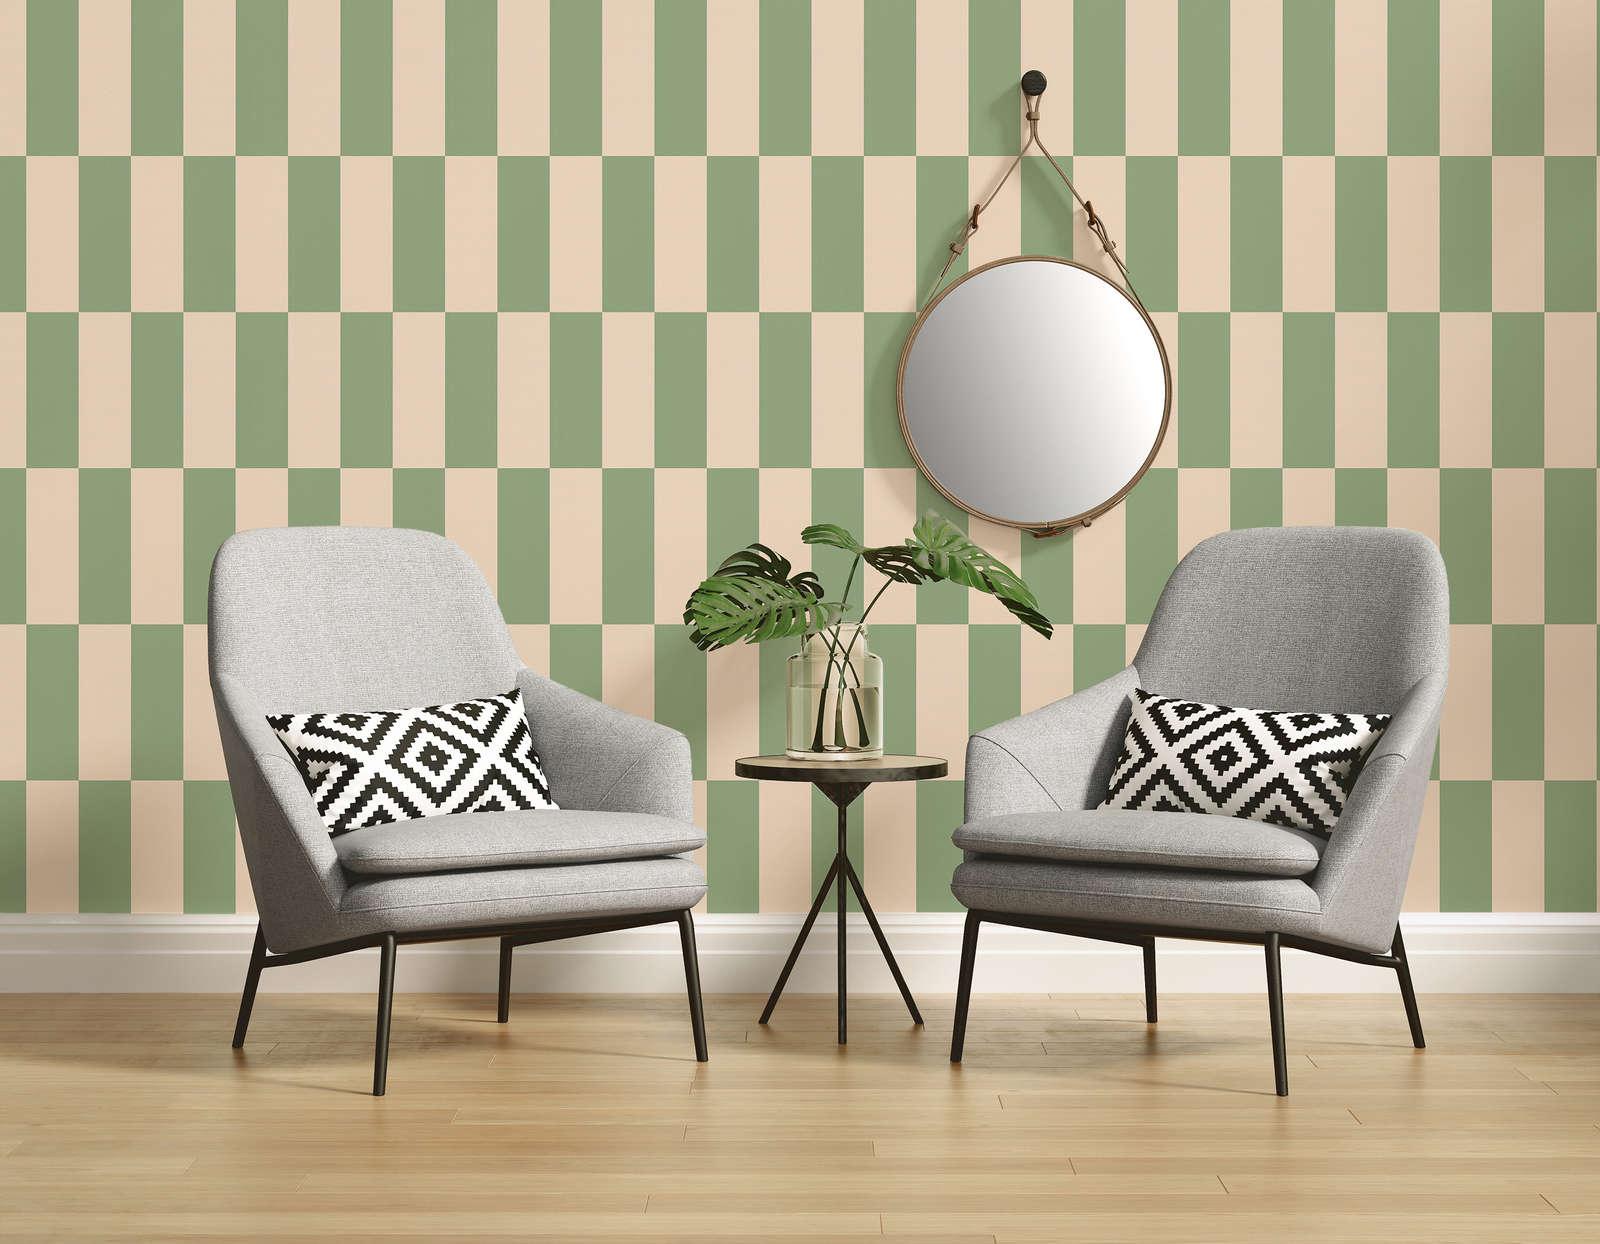             Non-woven wallpaper graphic squares two-tone - beige, green
        